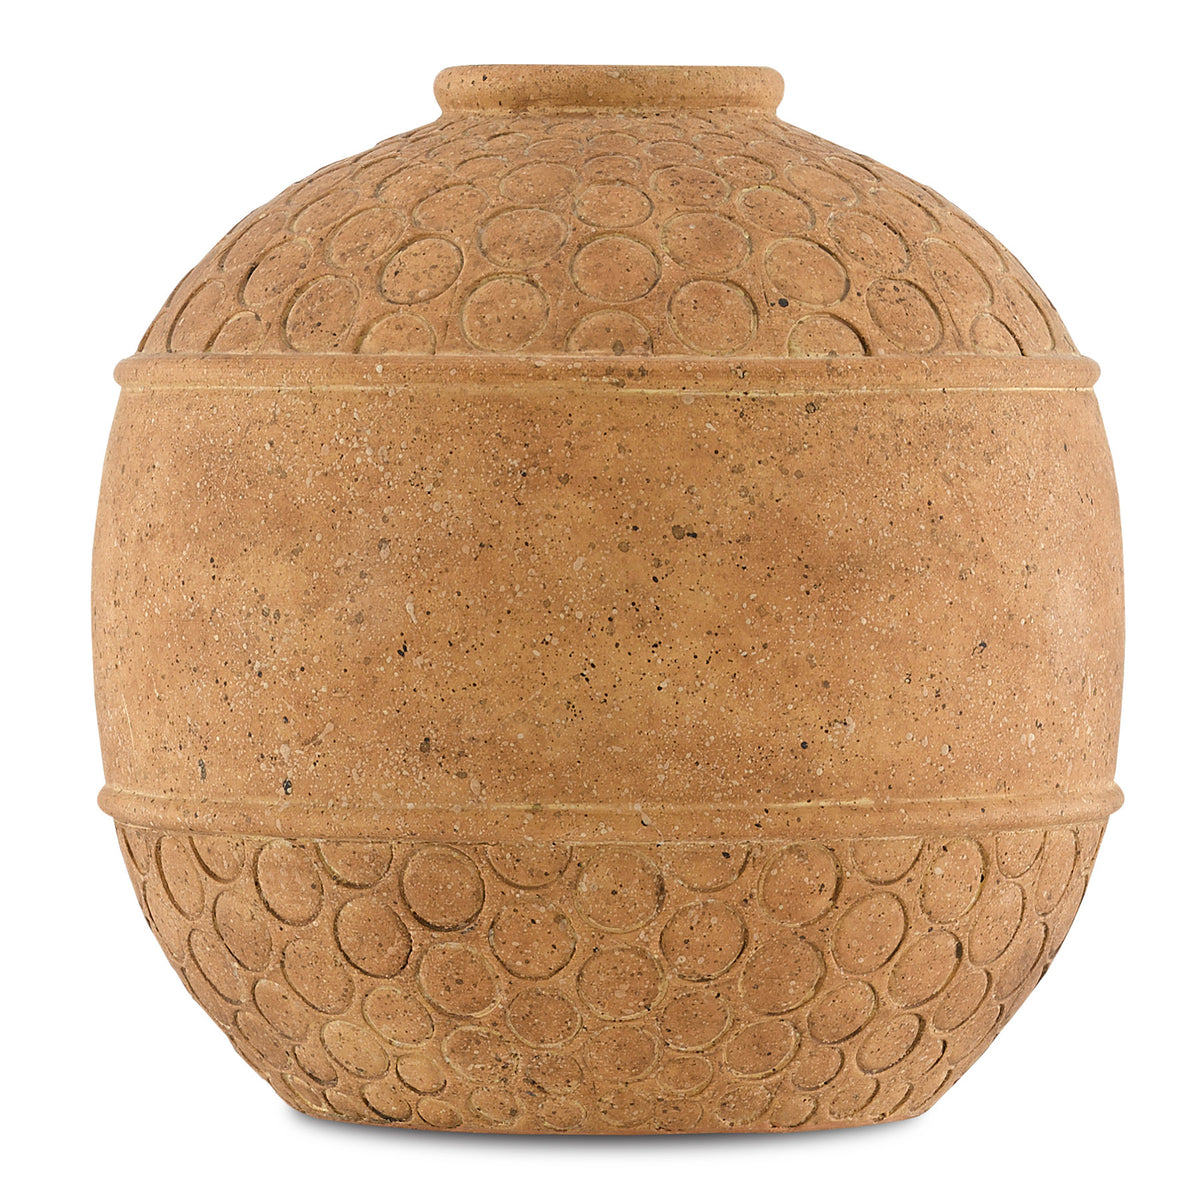 Lubao Small Vase